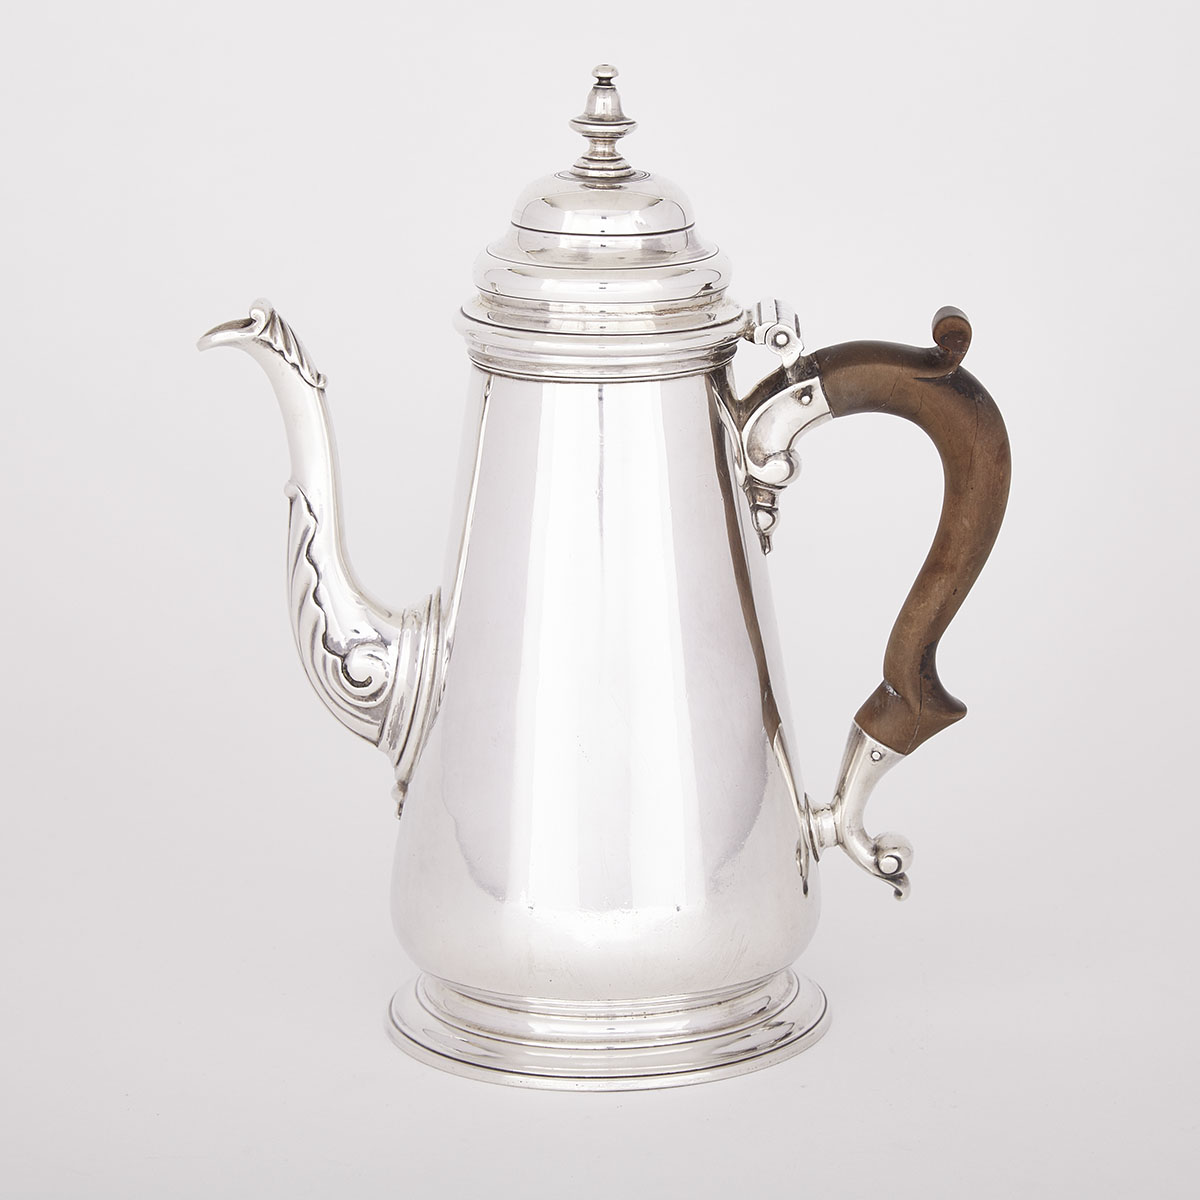 George II Silver Coffee Pot, William Cripps, London, 1750